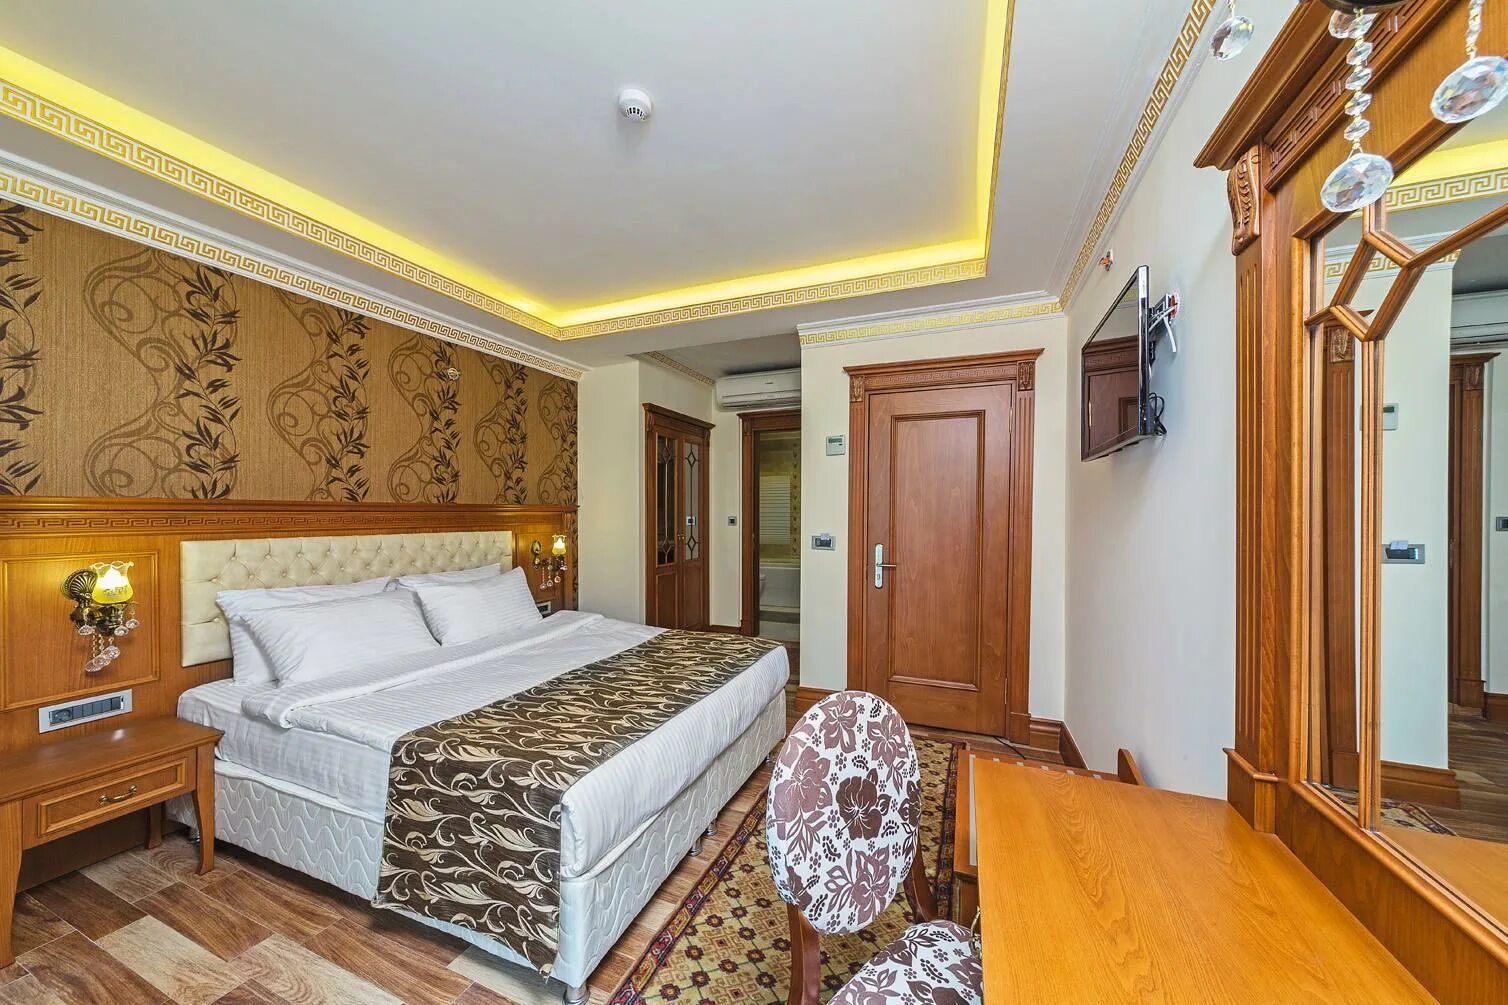 Lausos Hotel Стамбул. Lausos Hotel 4. Lausos Palace Hotel 5* (Nisantasi). Retro Palace отель. Пера палас отель стамбул